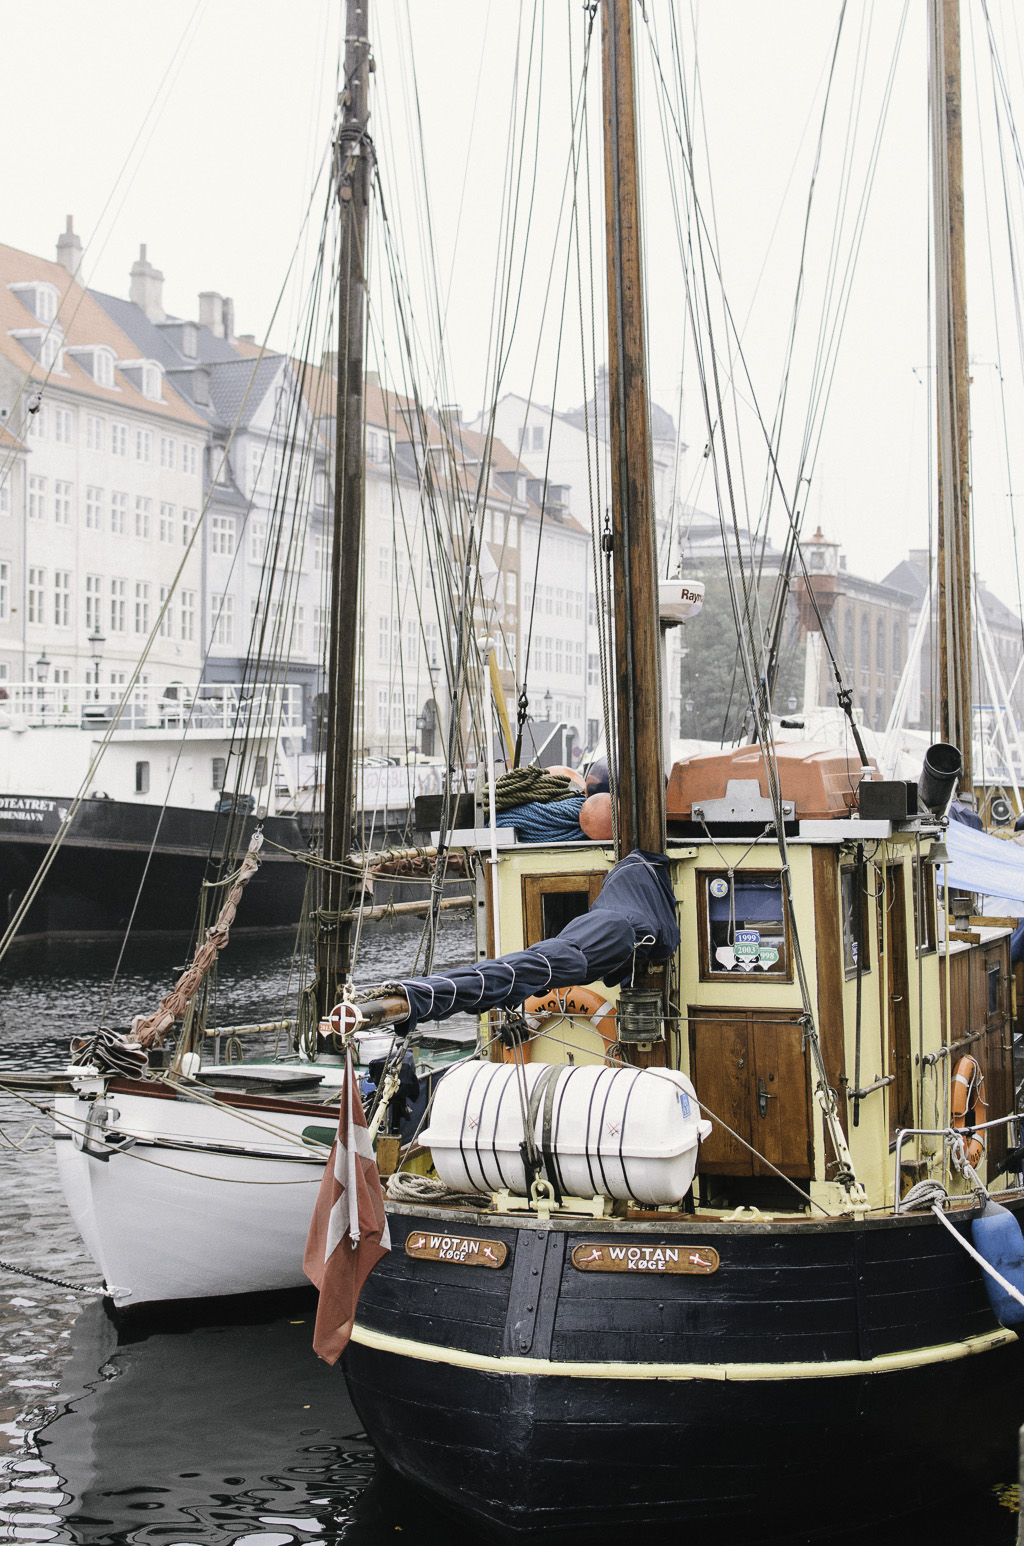 Sailboats at the Nyhavn in Copenhagen